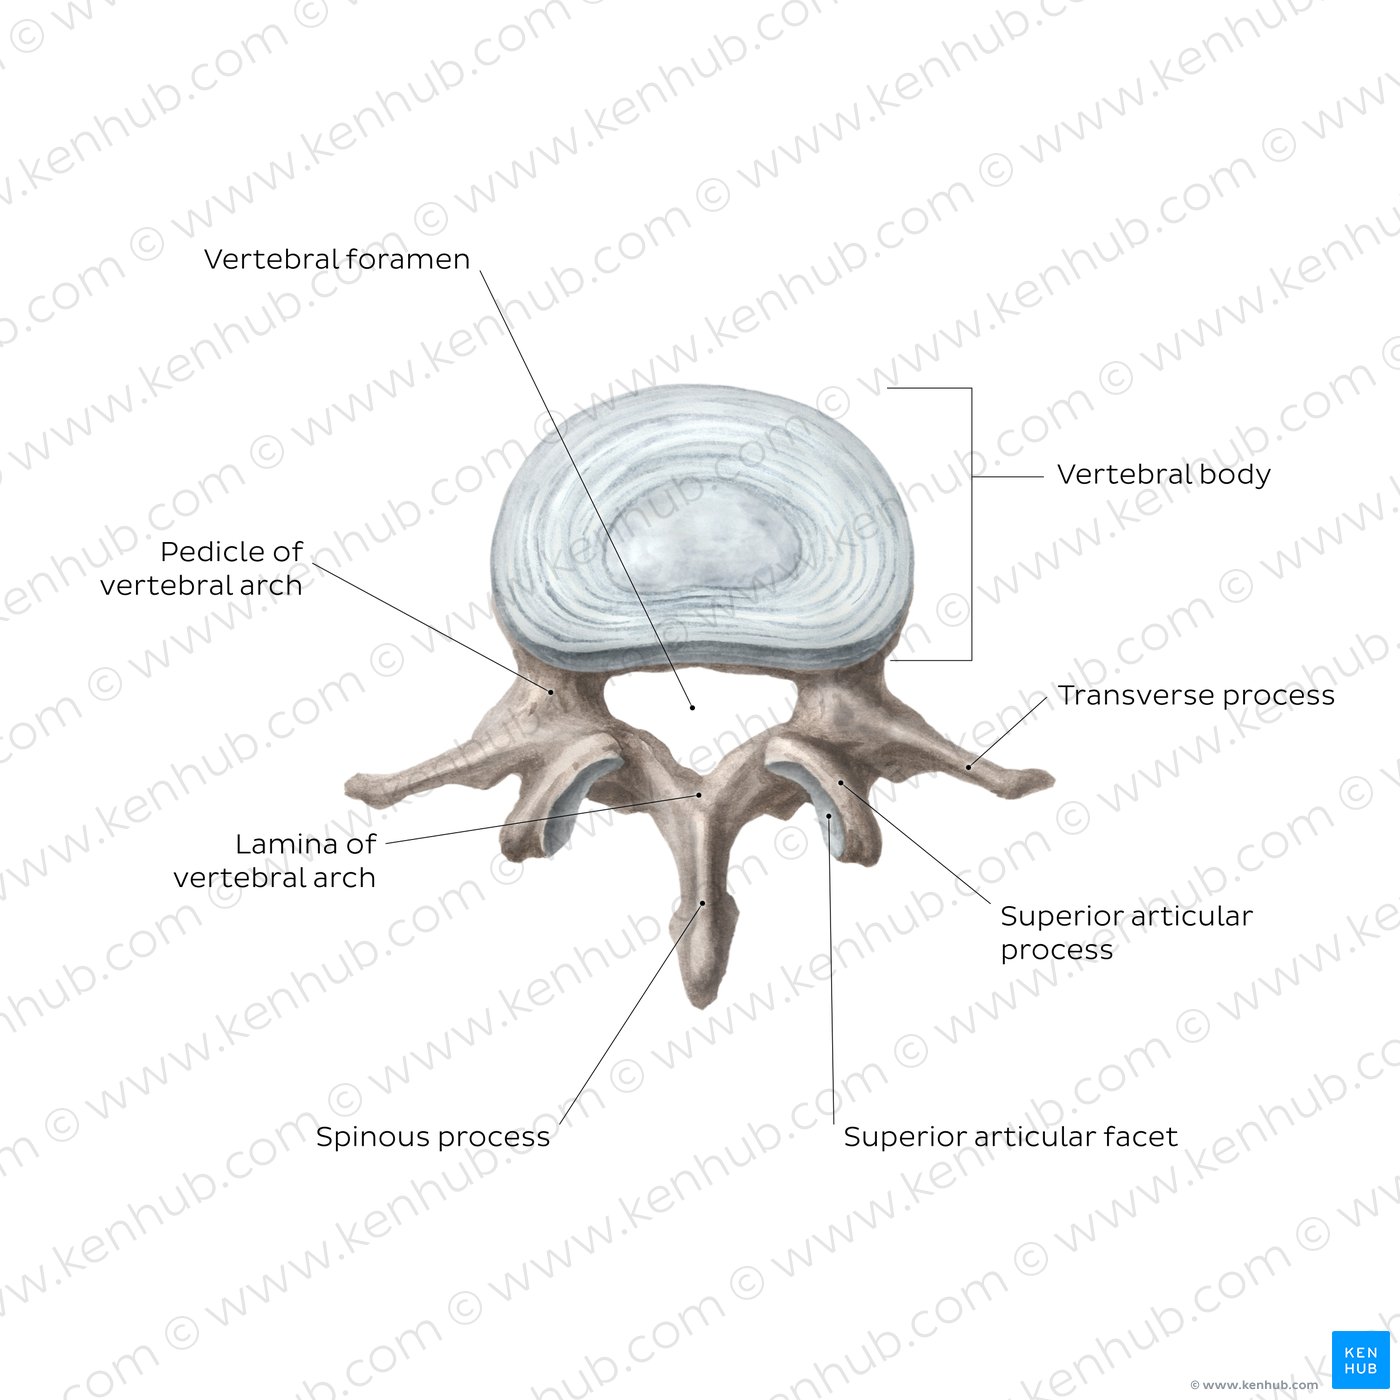 Anatomy of the typical lumbar vertebra (diagram)